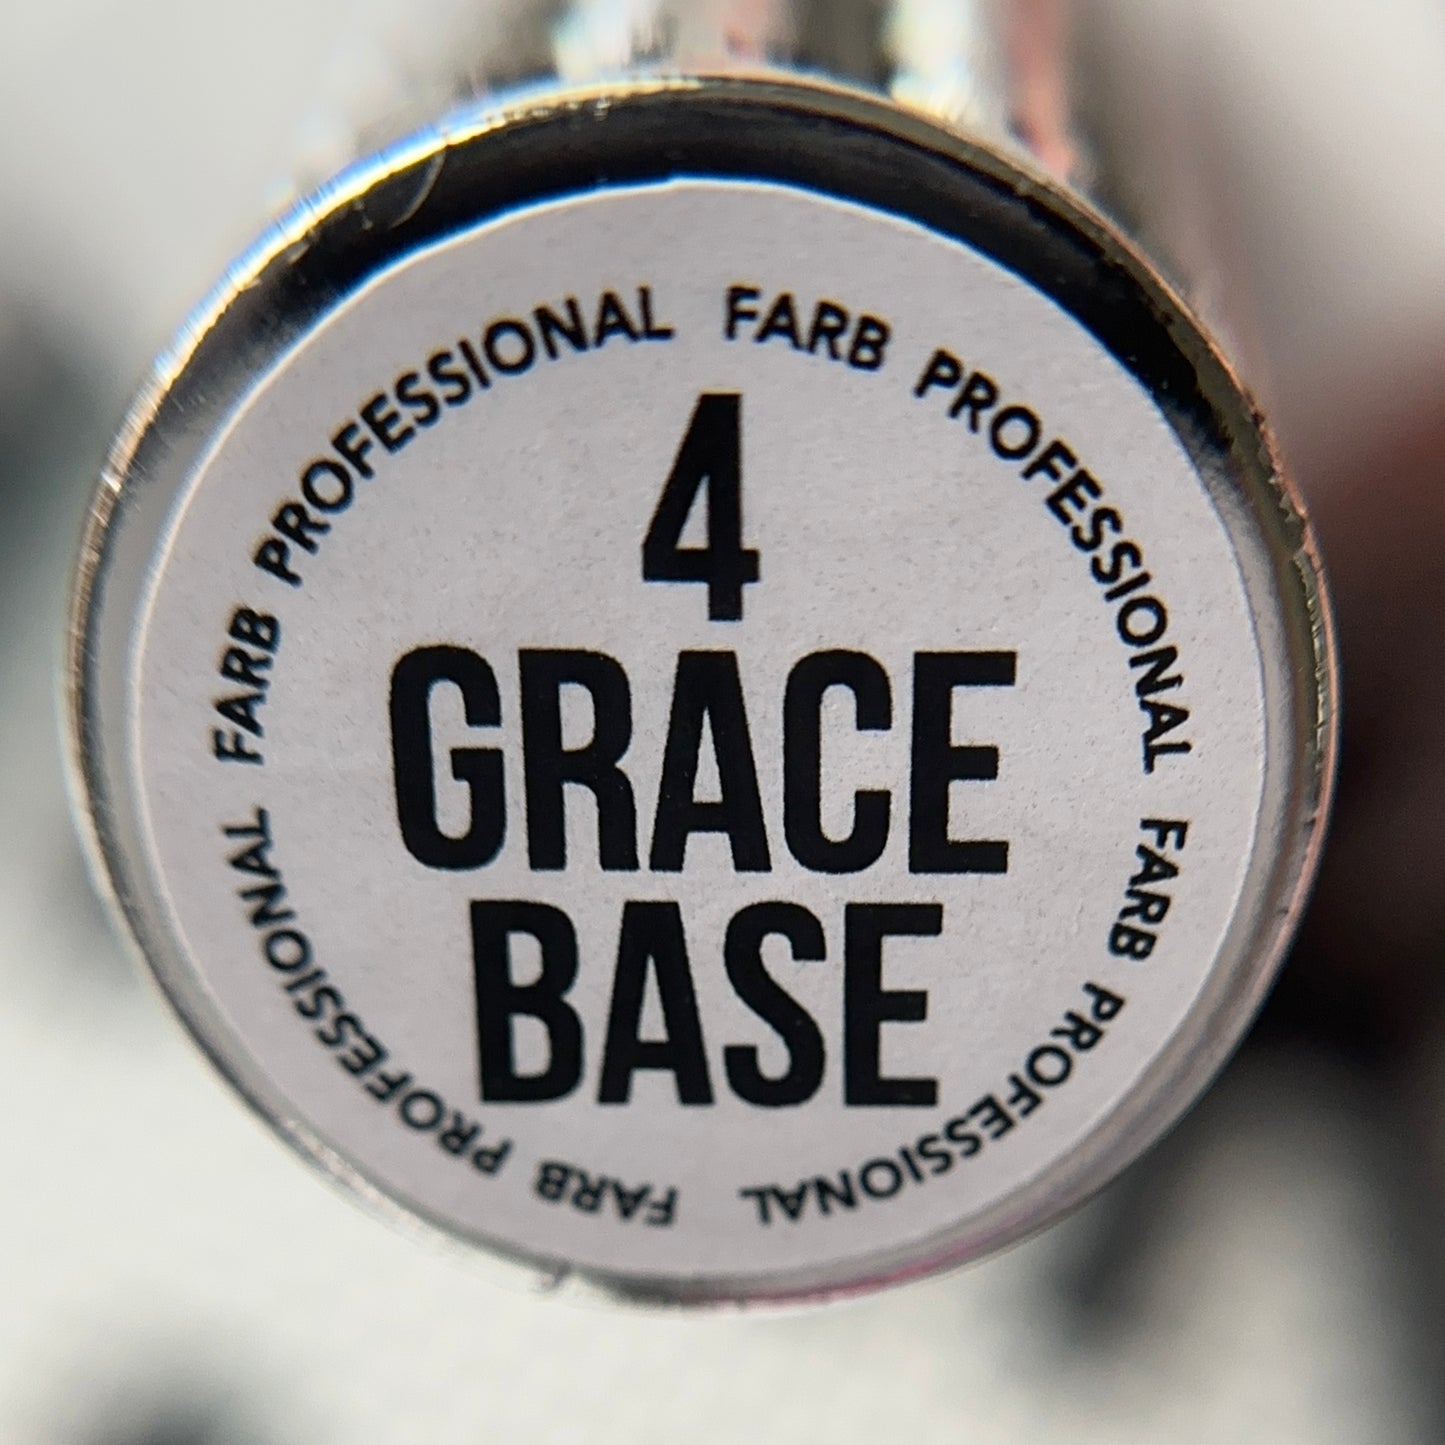 FARB Professional ART BASE GRACE #4, 15ml